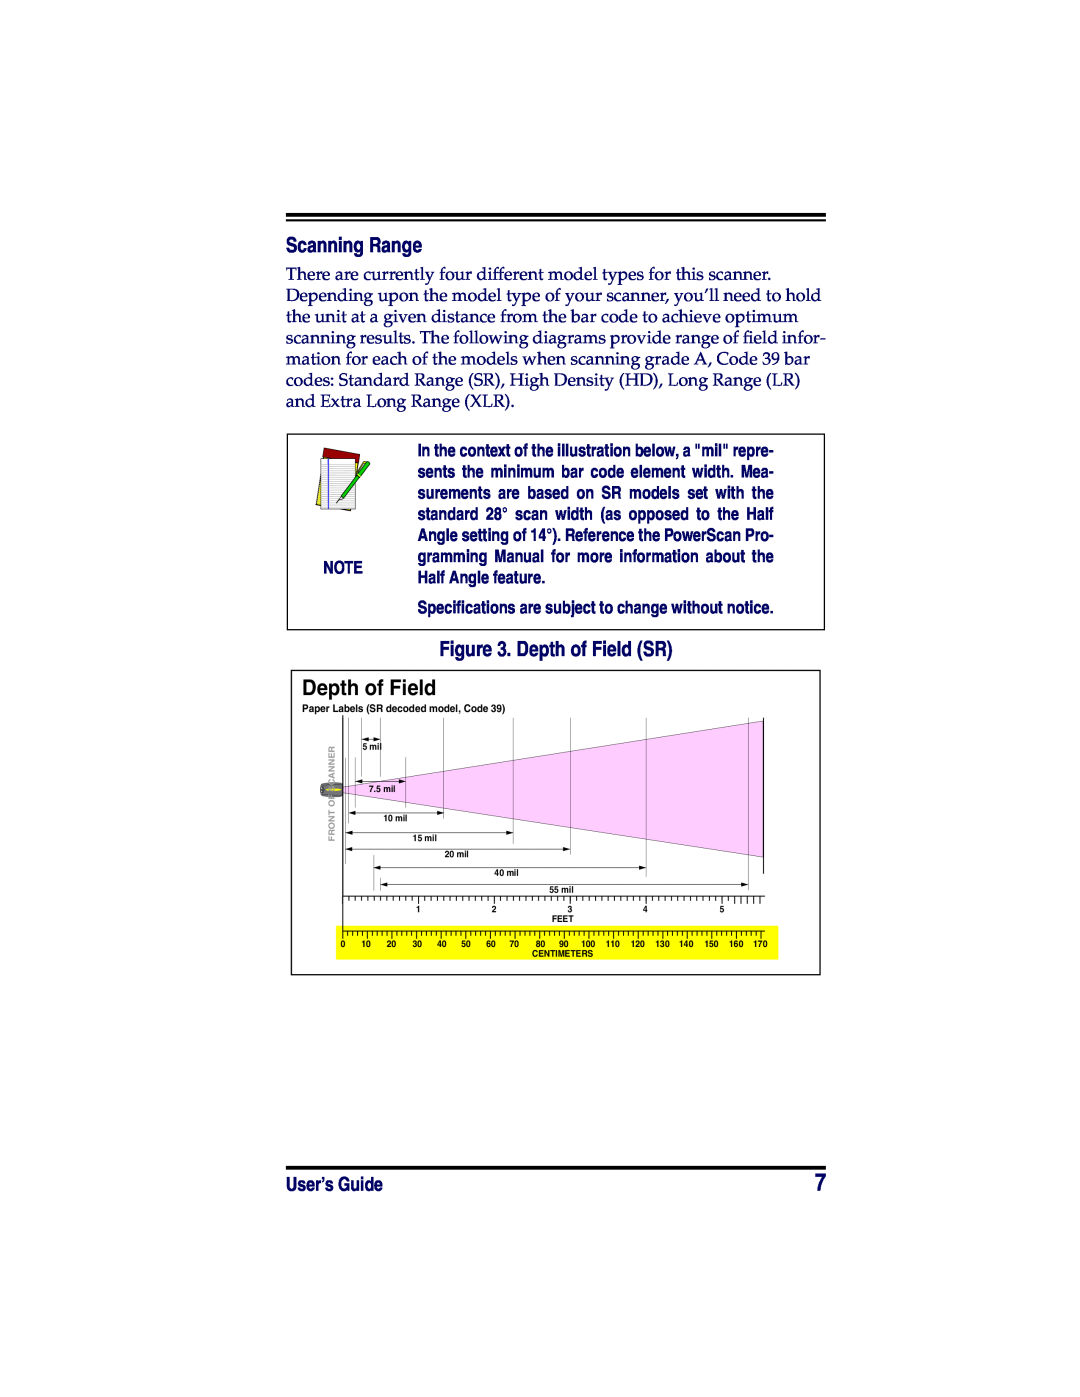 Datalogic Scanning XLR, HD manual Scanning Range, Depth of Field SR, User’s Guide 